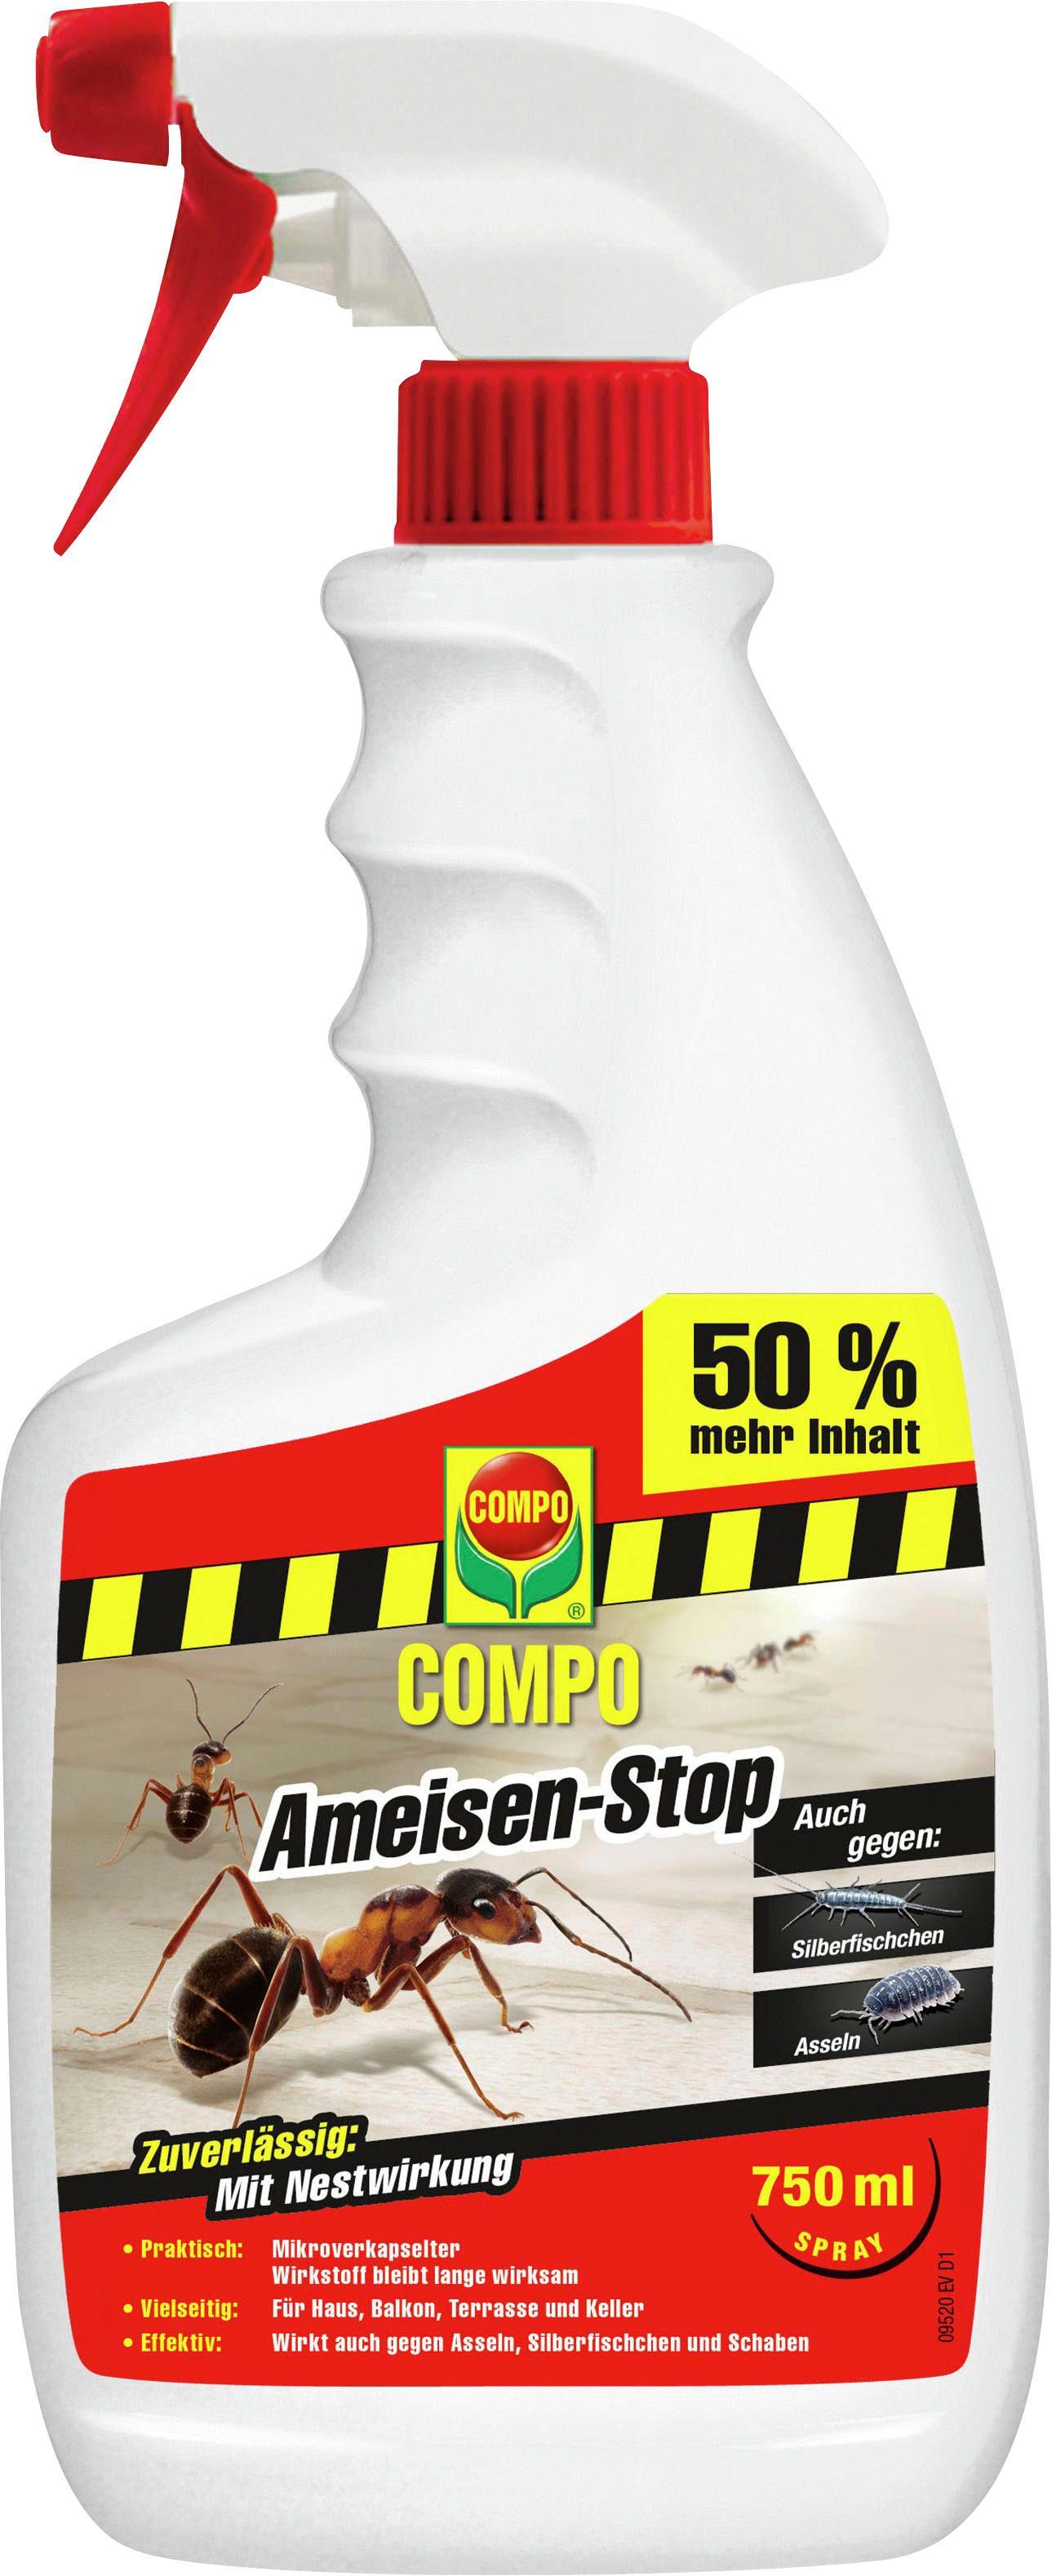 Compo Ameisengift »Ameisen-Stop«, 750 ml online kaufen | OTTO